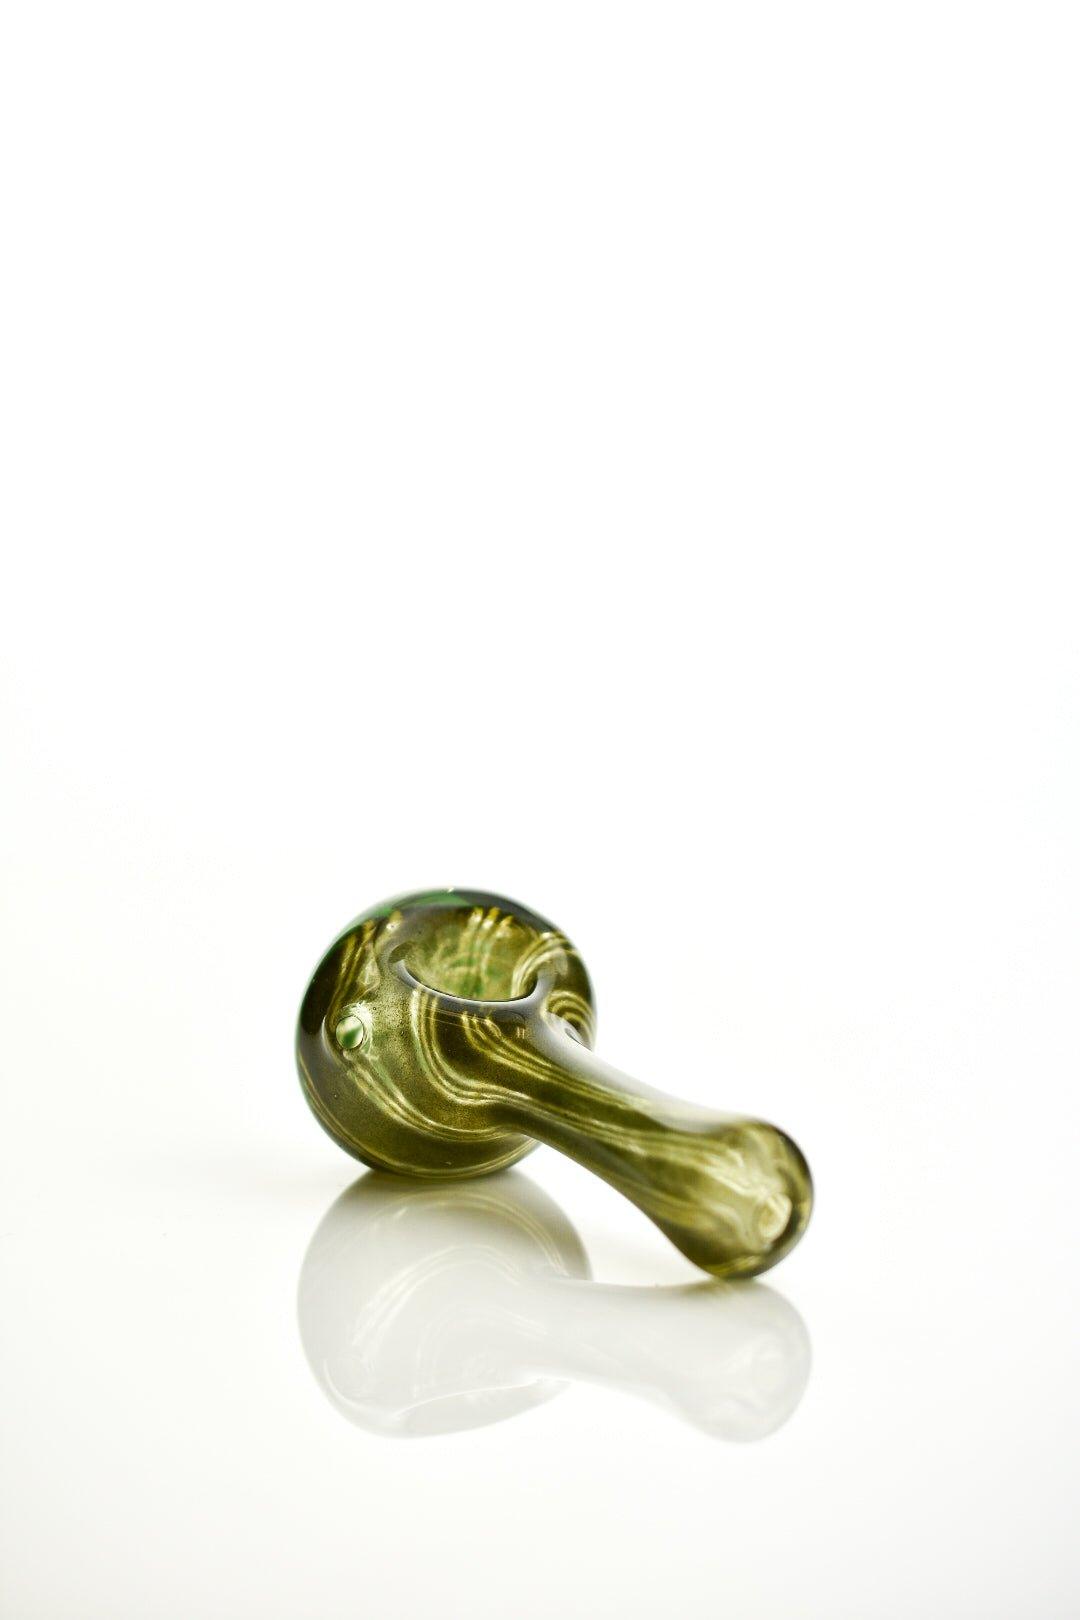 Hoffman Glass Reticello Green - Smoke Spot Smoke Shop